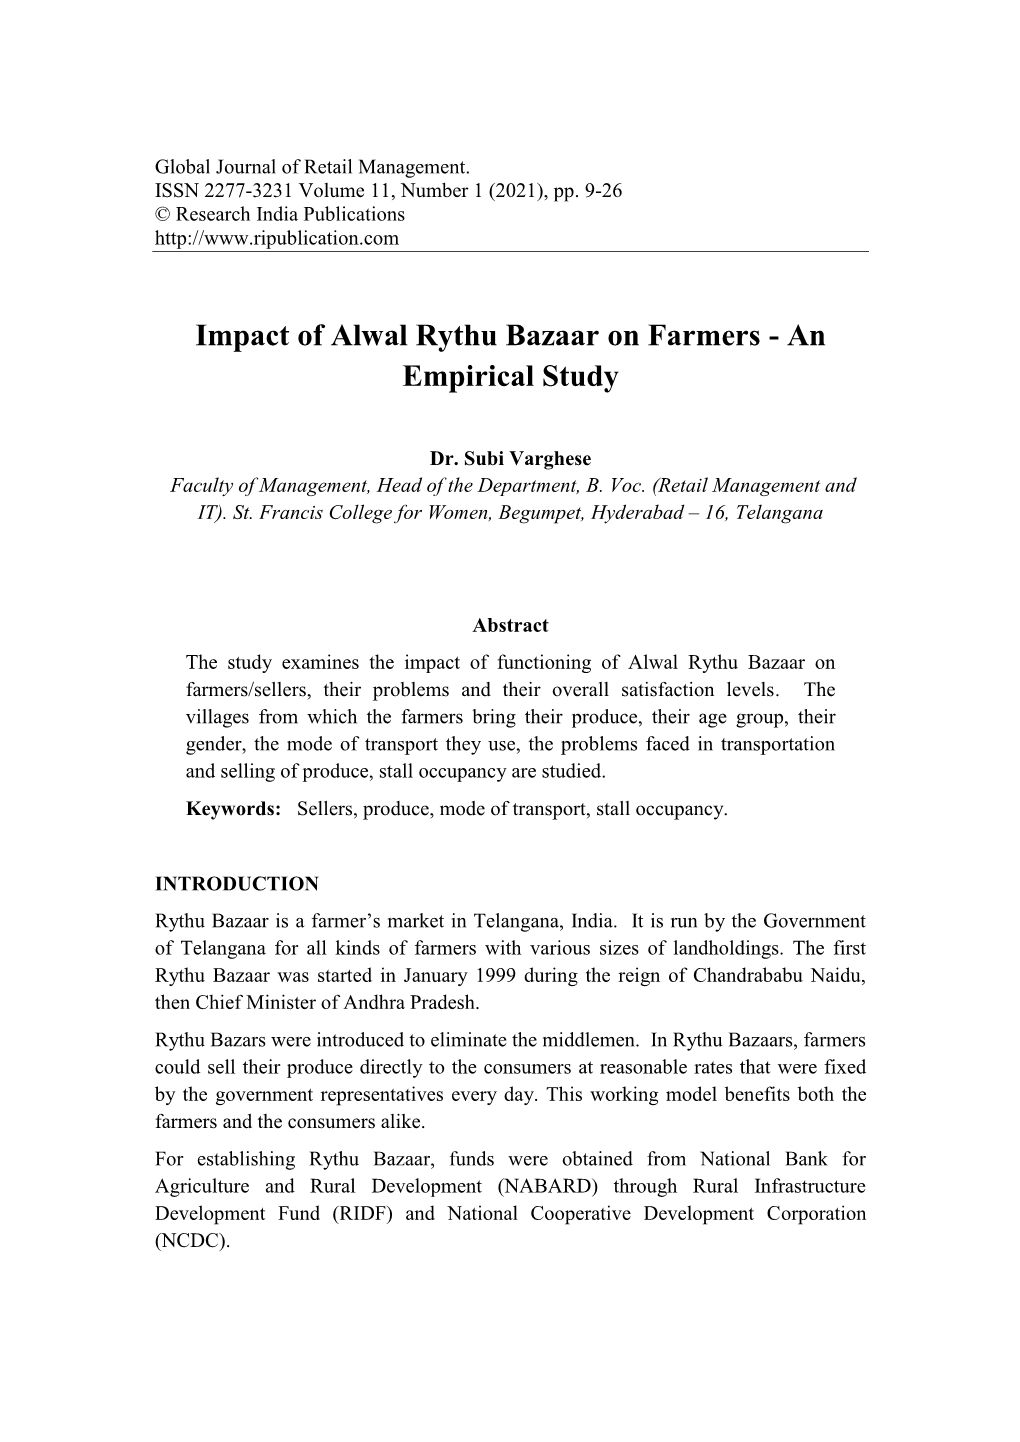 Impact of Alwal Rythu Bazaar on Farmers - an Empirical Study